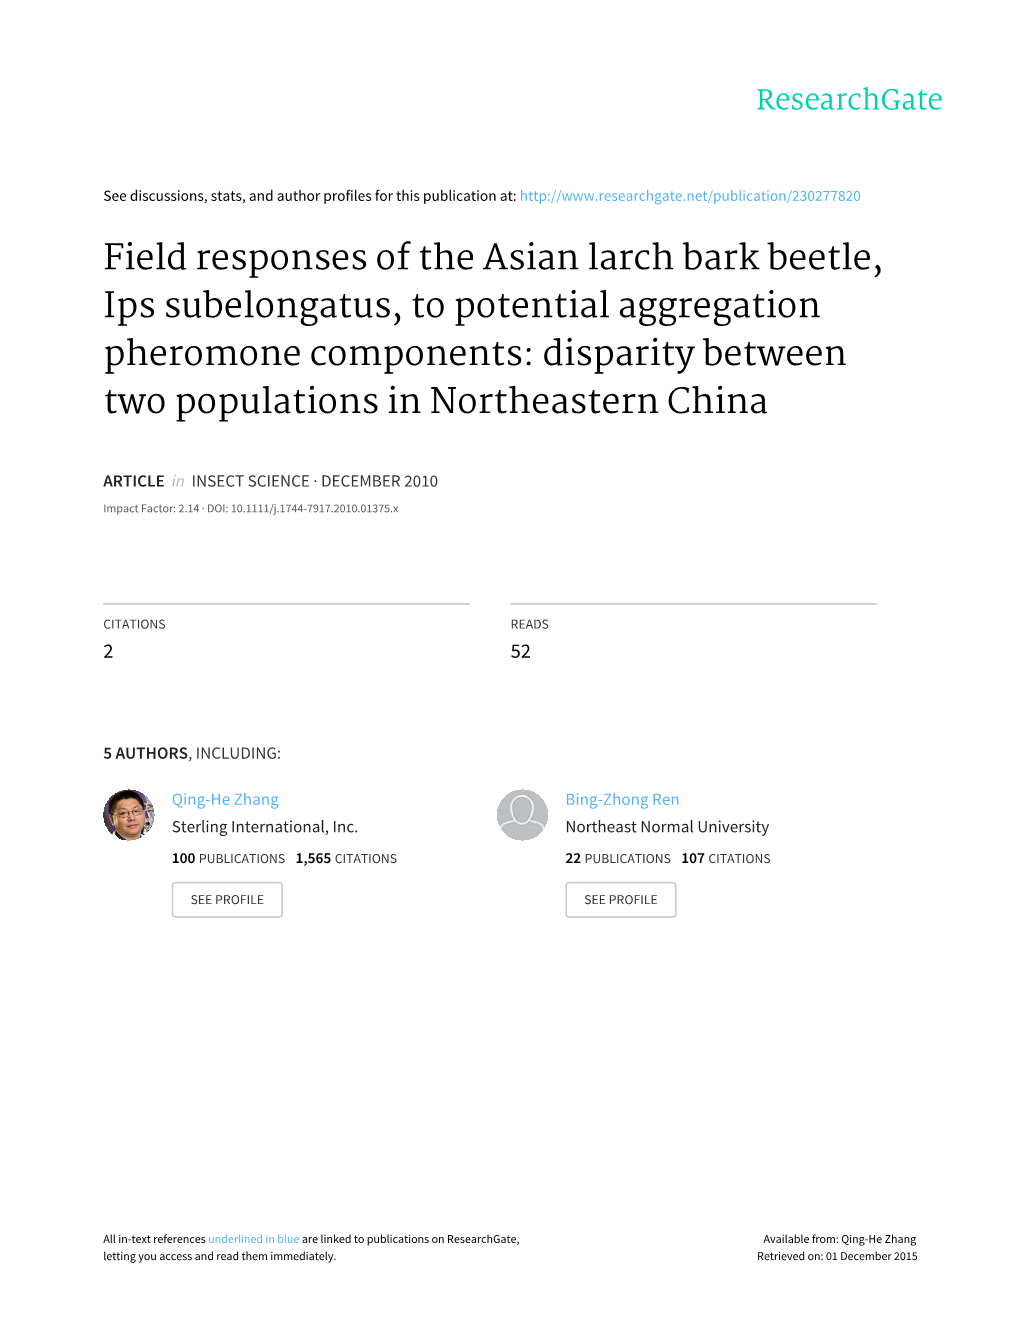 Field Responses of the Asian Larch Bark Beetle, Ips Subelongatus, To